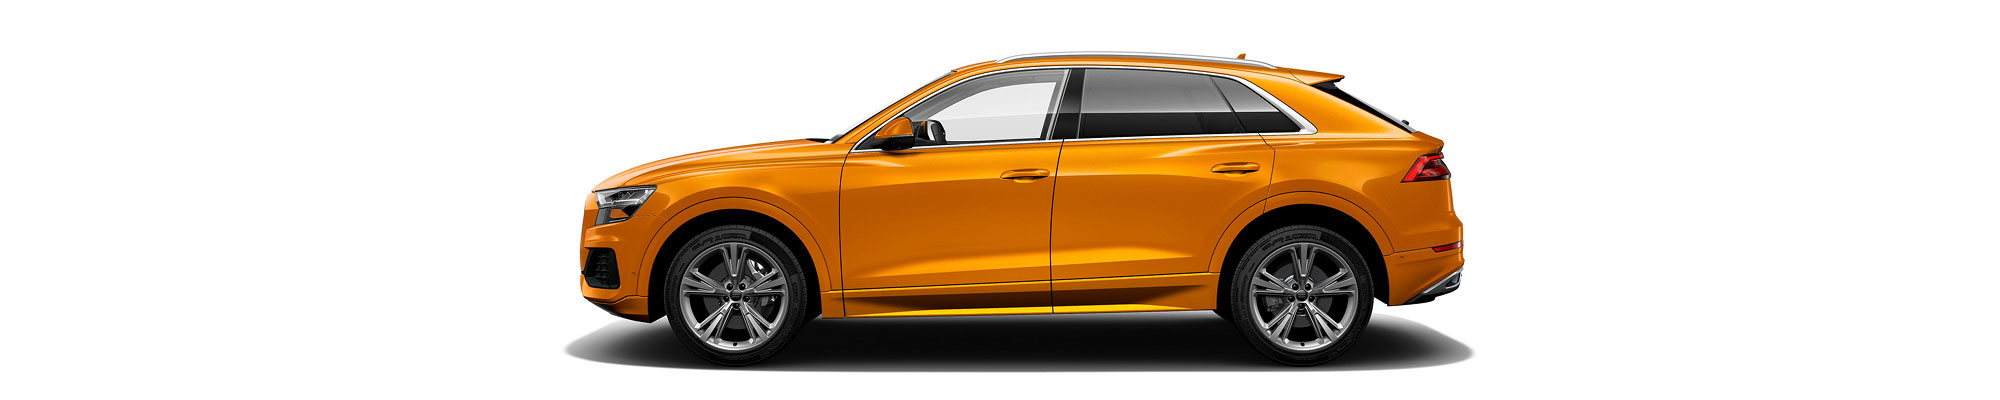 2020-Audi-Q8-Dimmitt-Automotive-featured